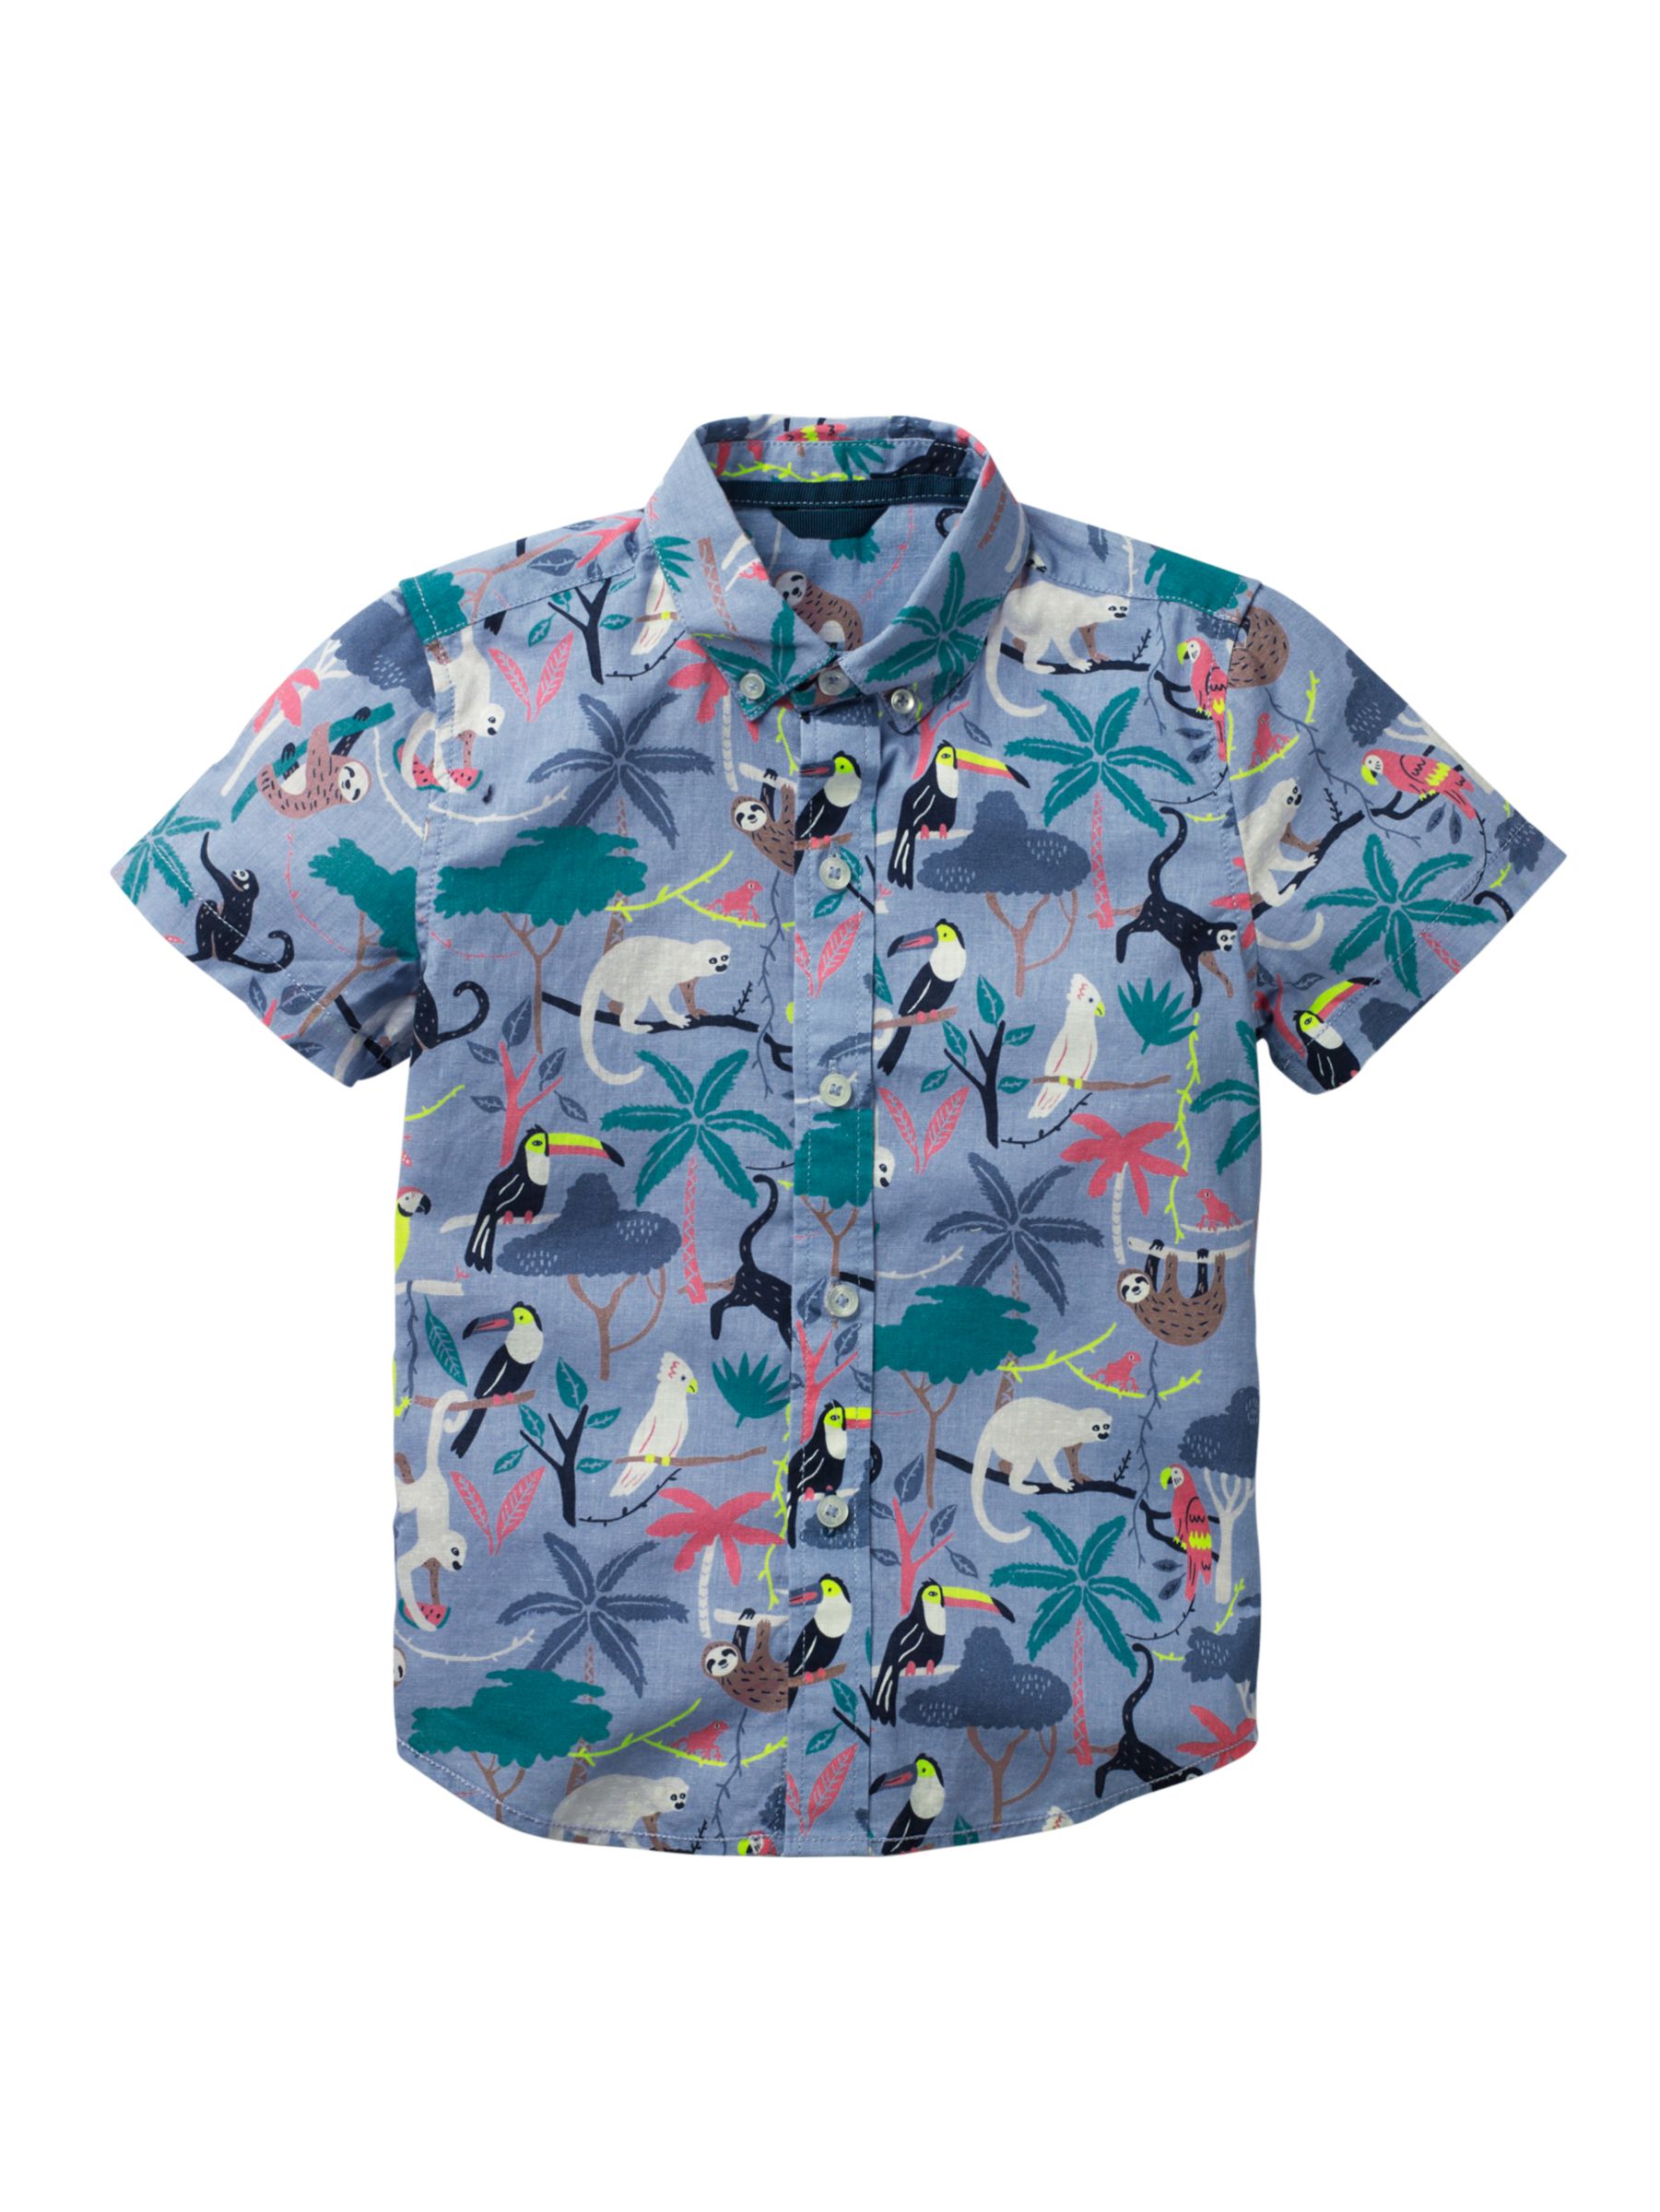 Mini Boden Boys' Fun Animal Print Shirt, Blue